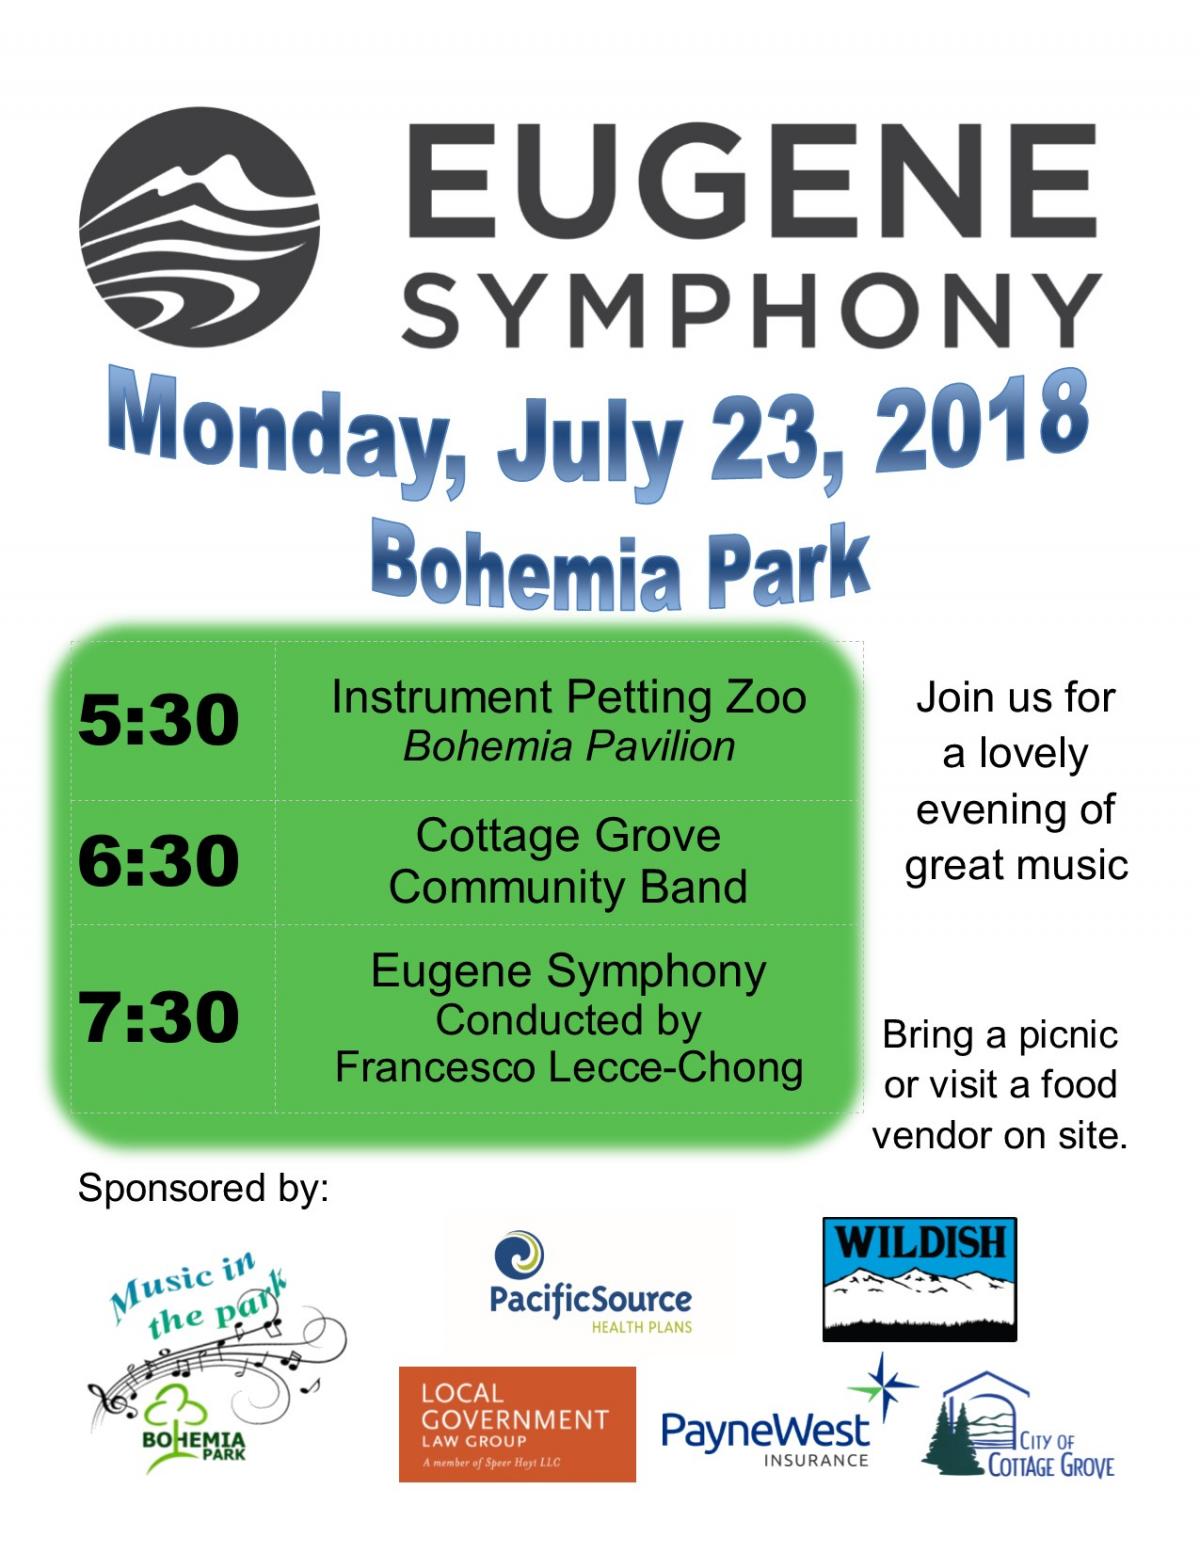 Eugene Symphony - July 23, 2018 in Bohemia Park